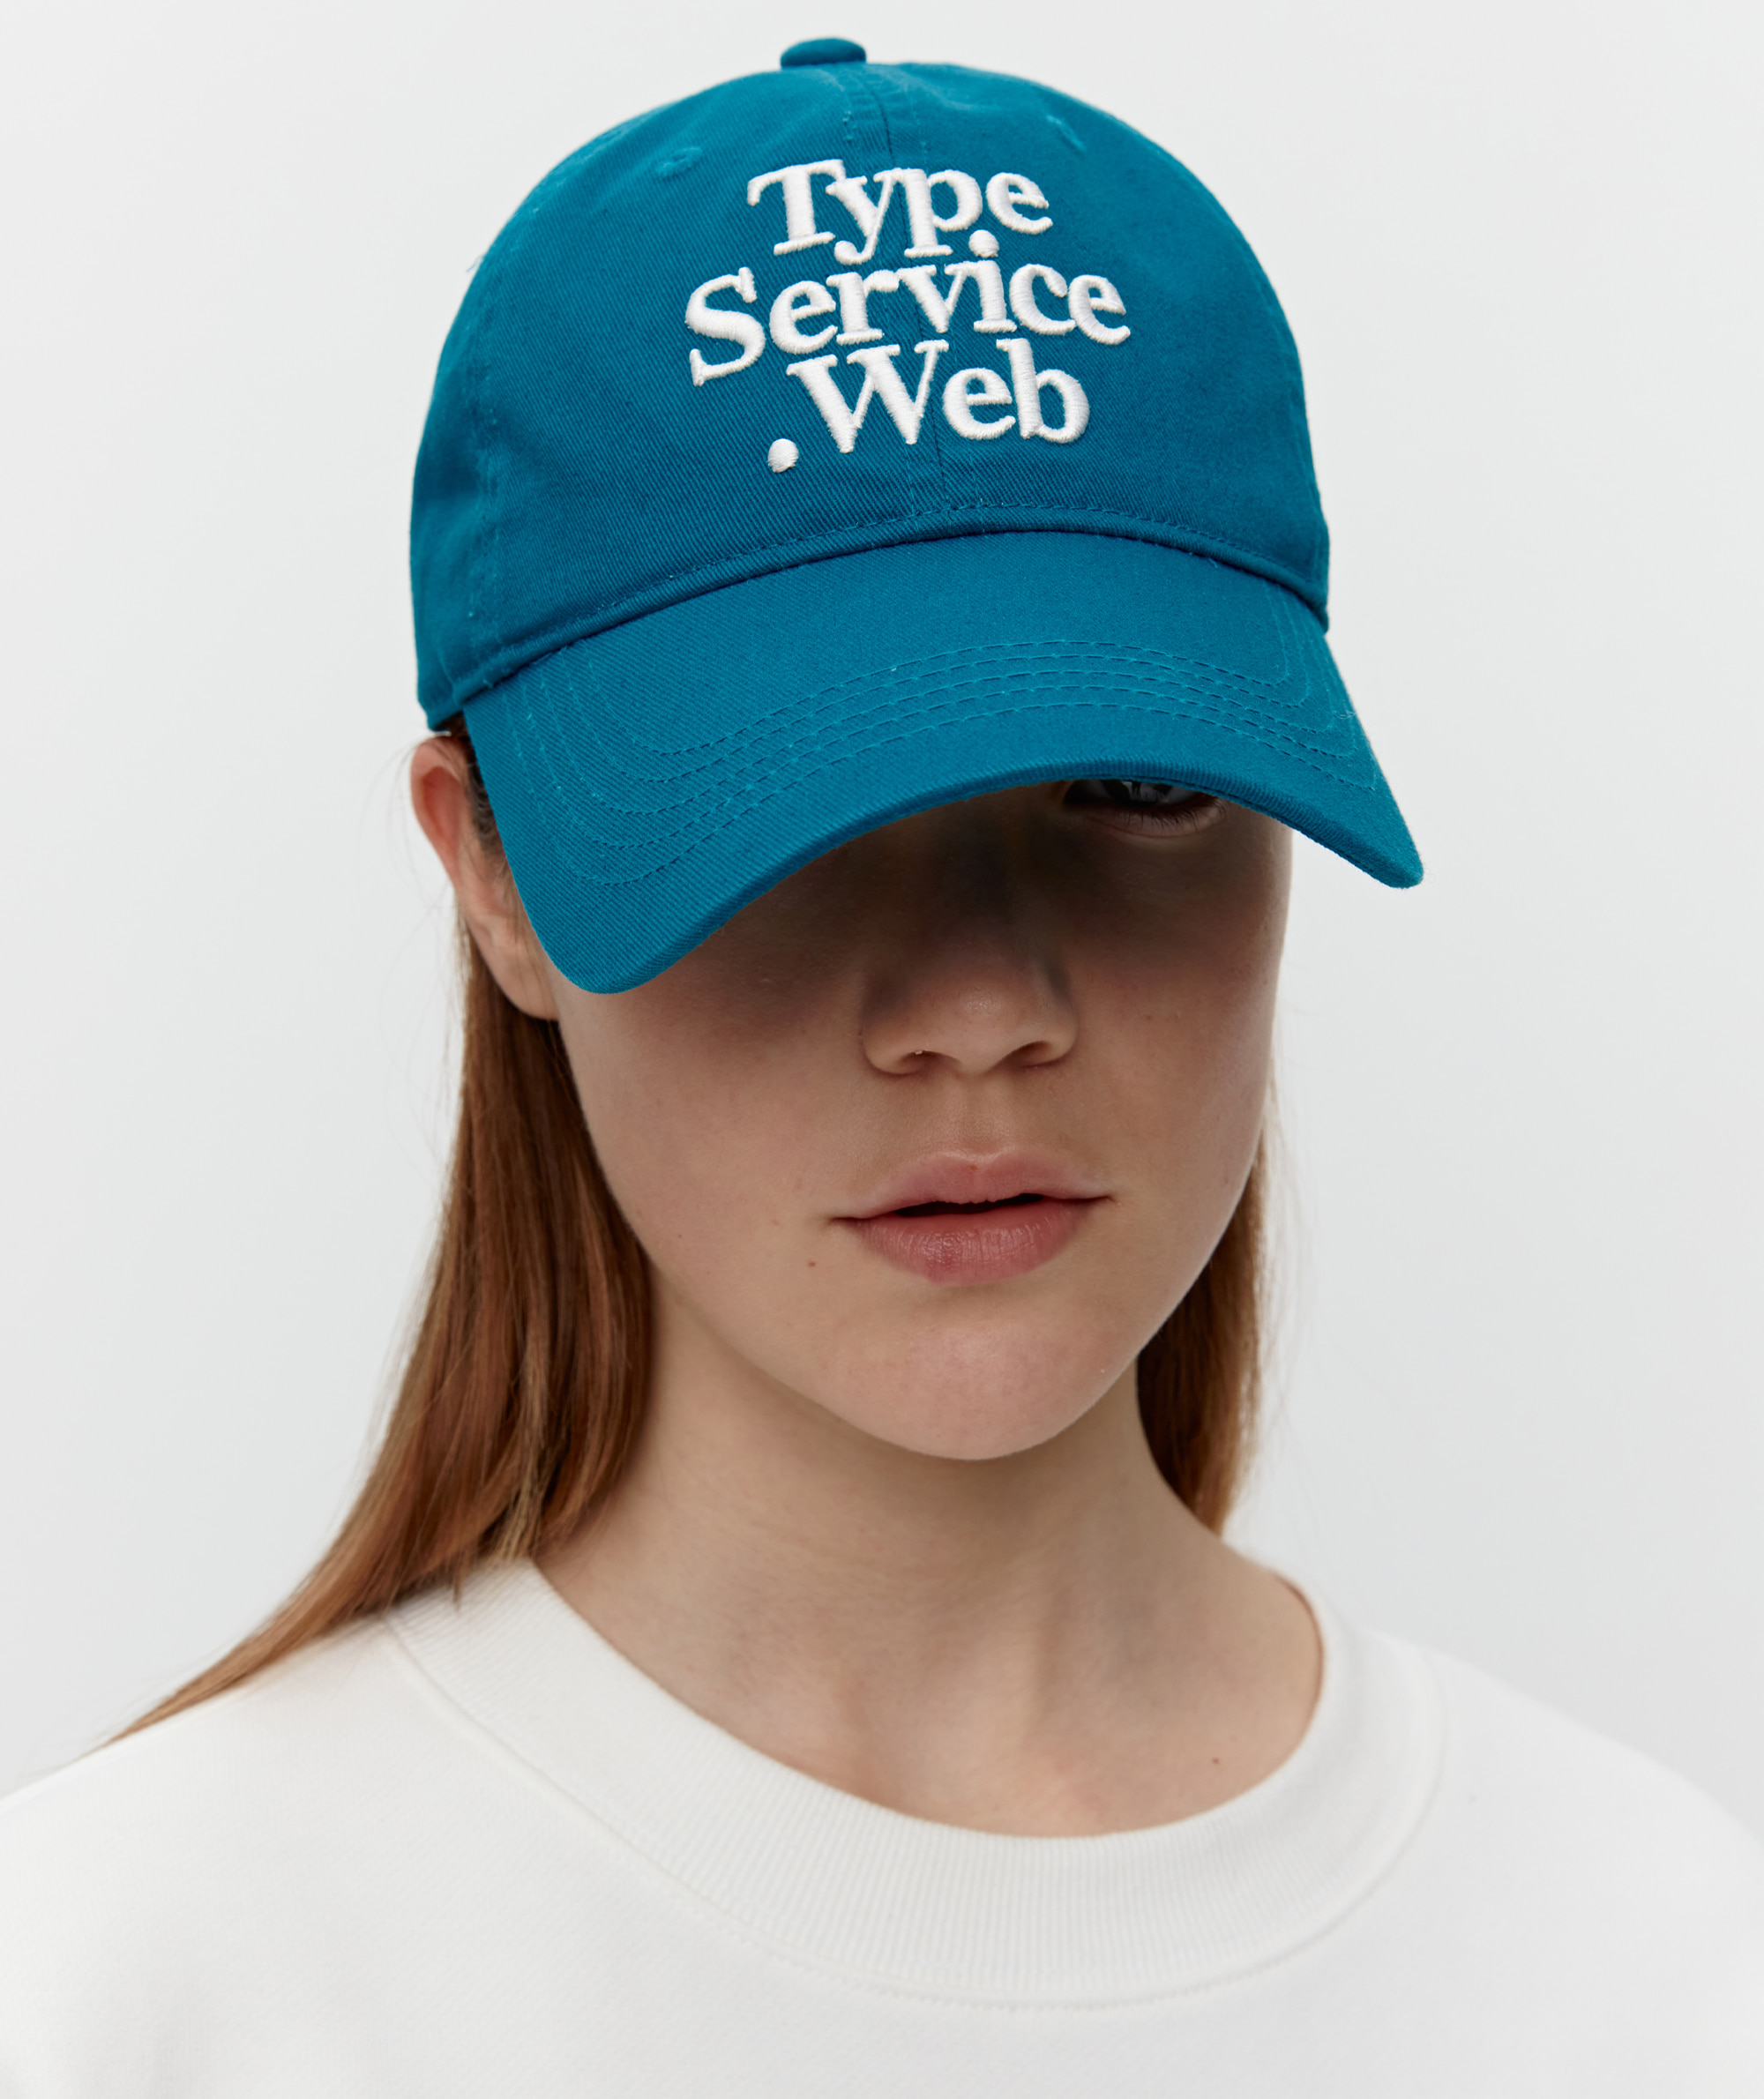 Typeservice Web Cap [Emerald Blue]